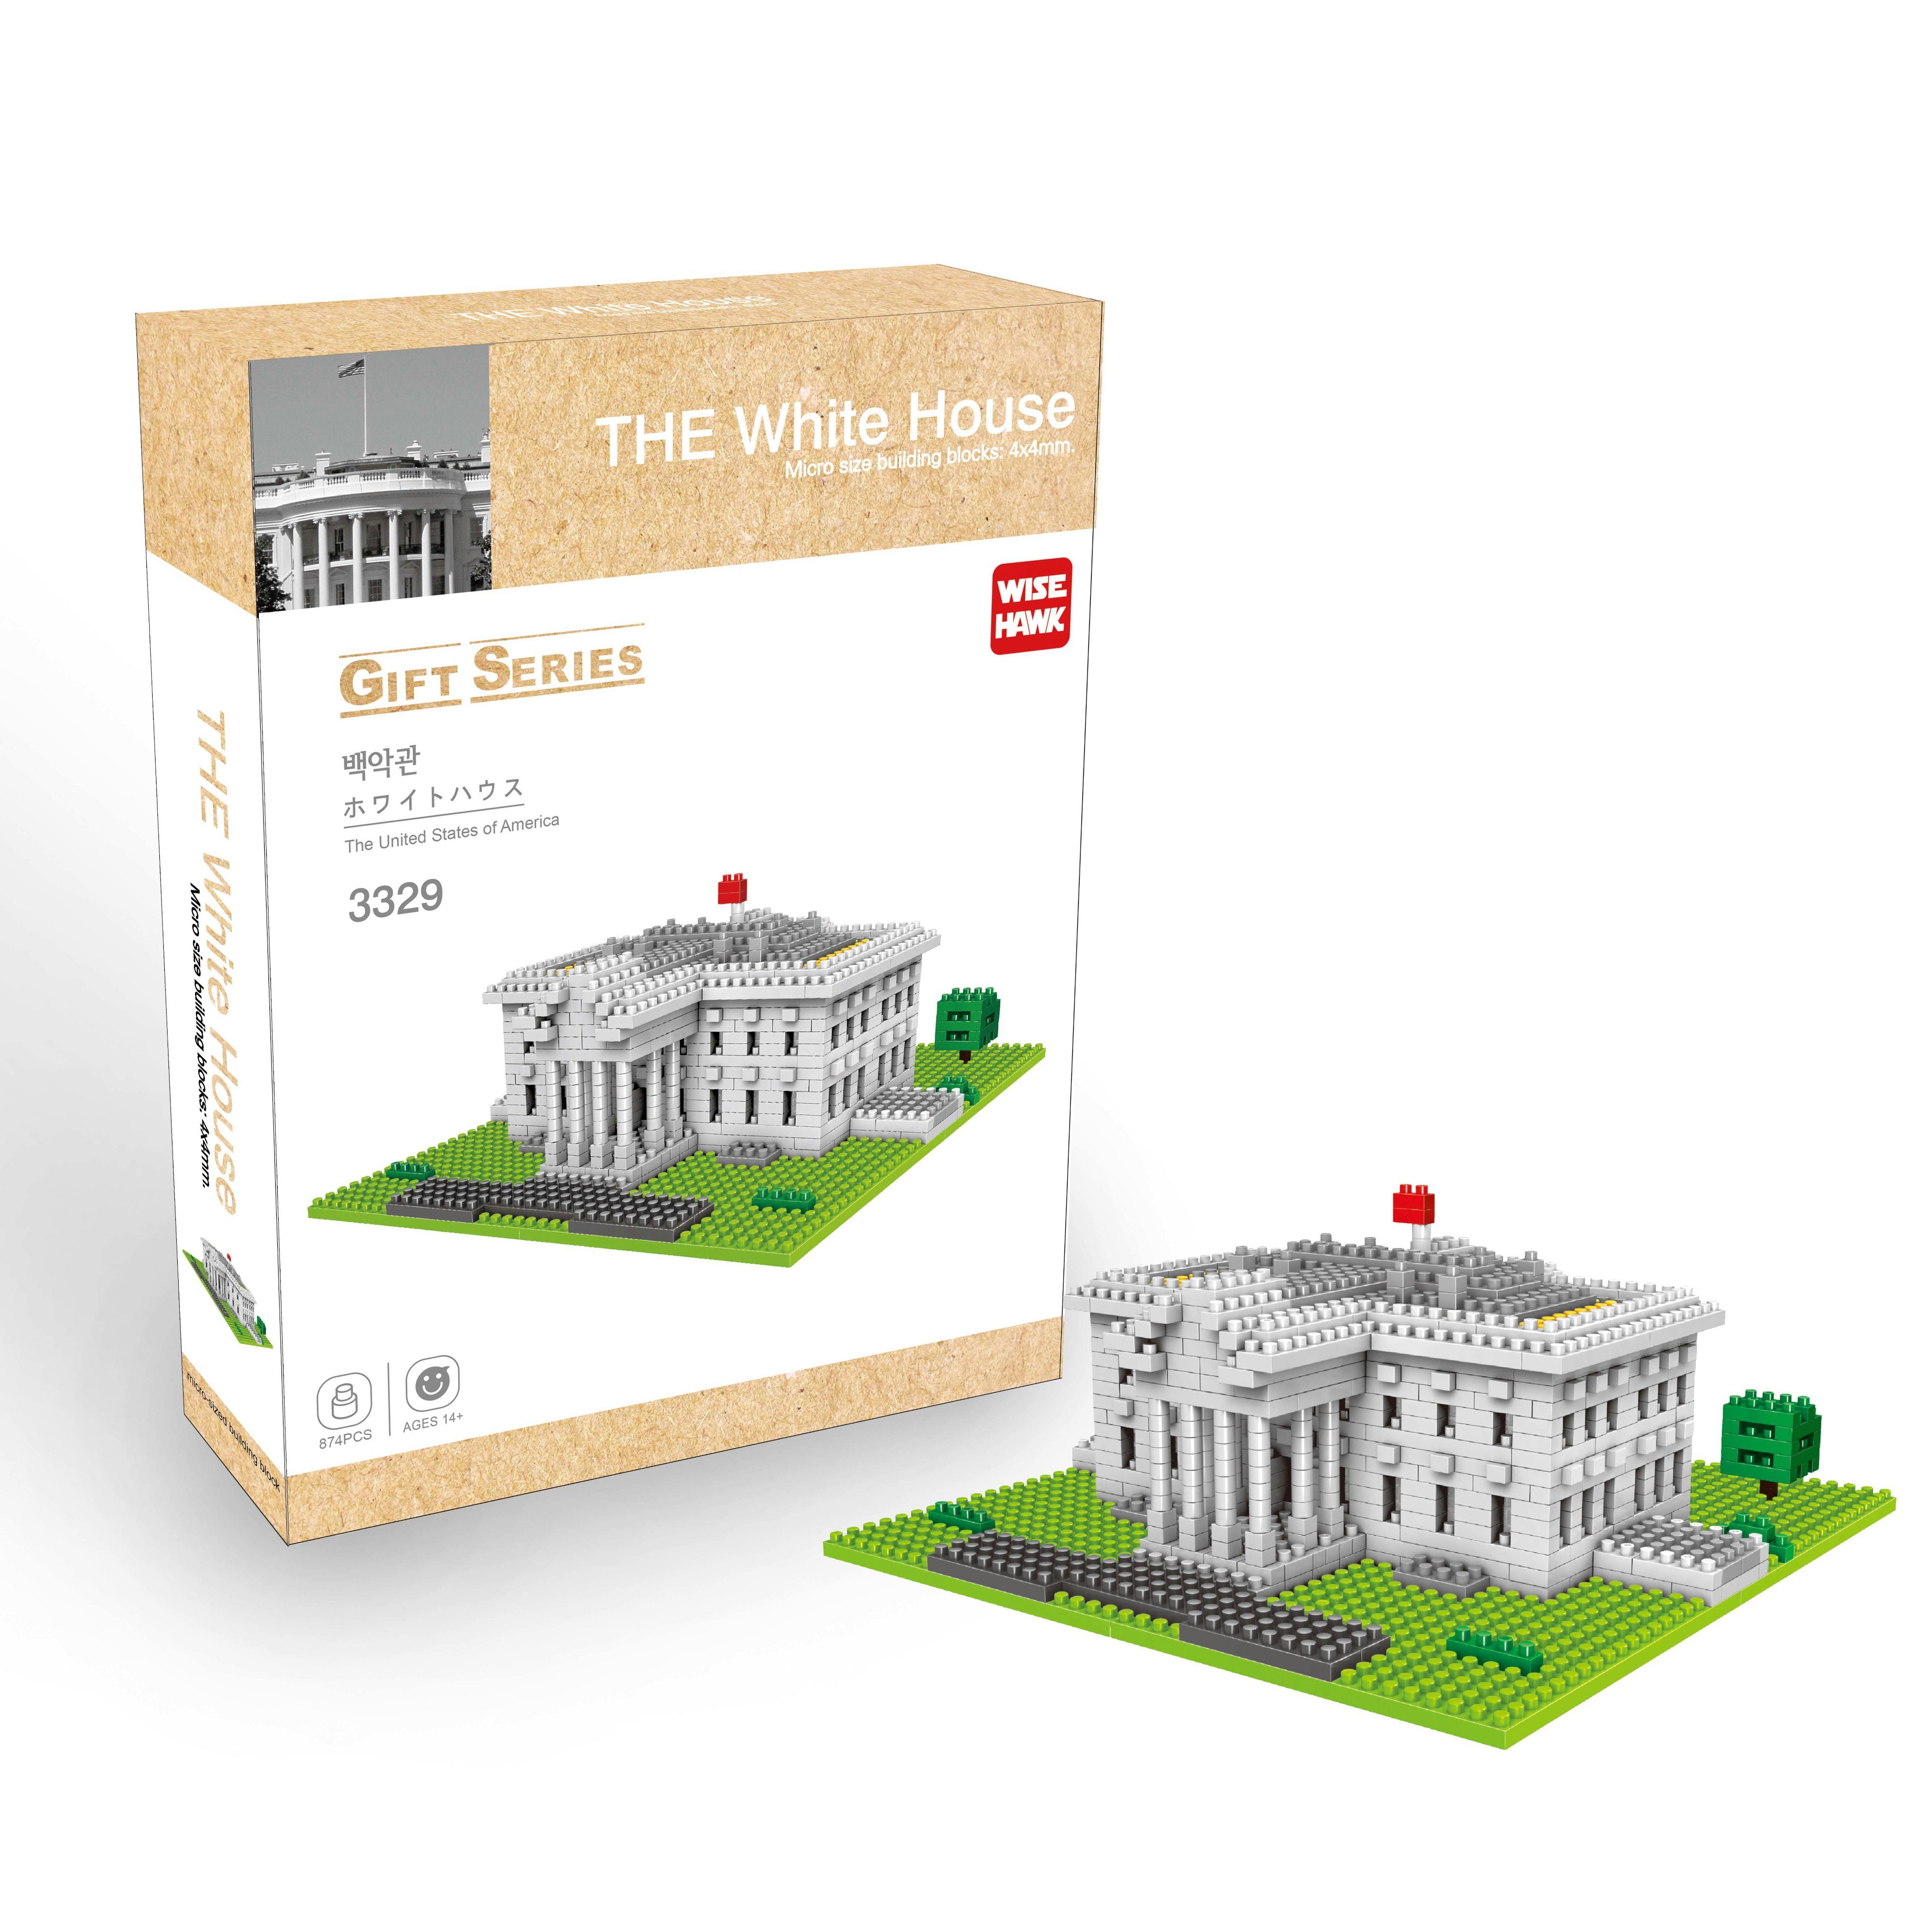 Tinisu Konstruktions-Spielset The White House Modell LNO Micro-Bricks Bausteine